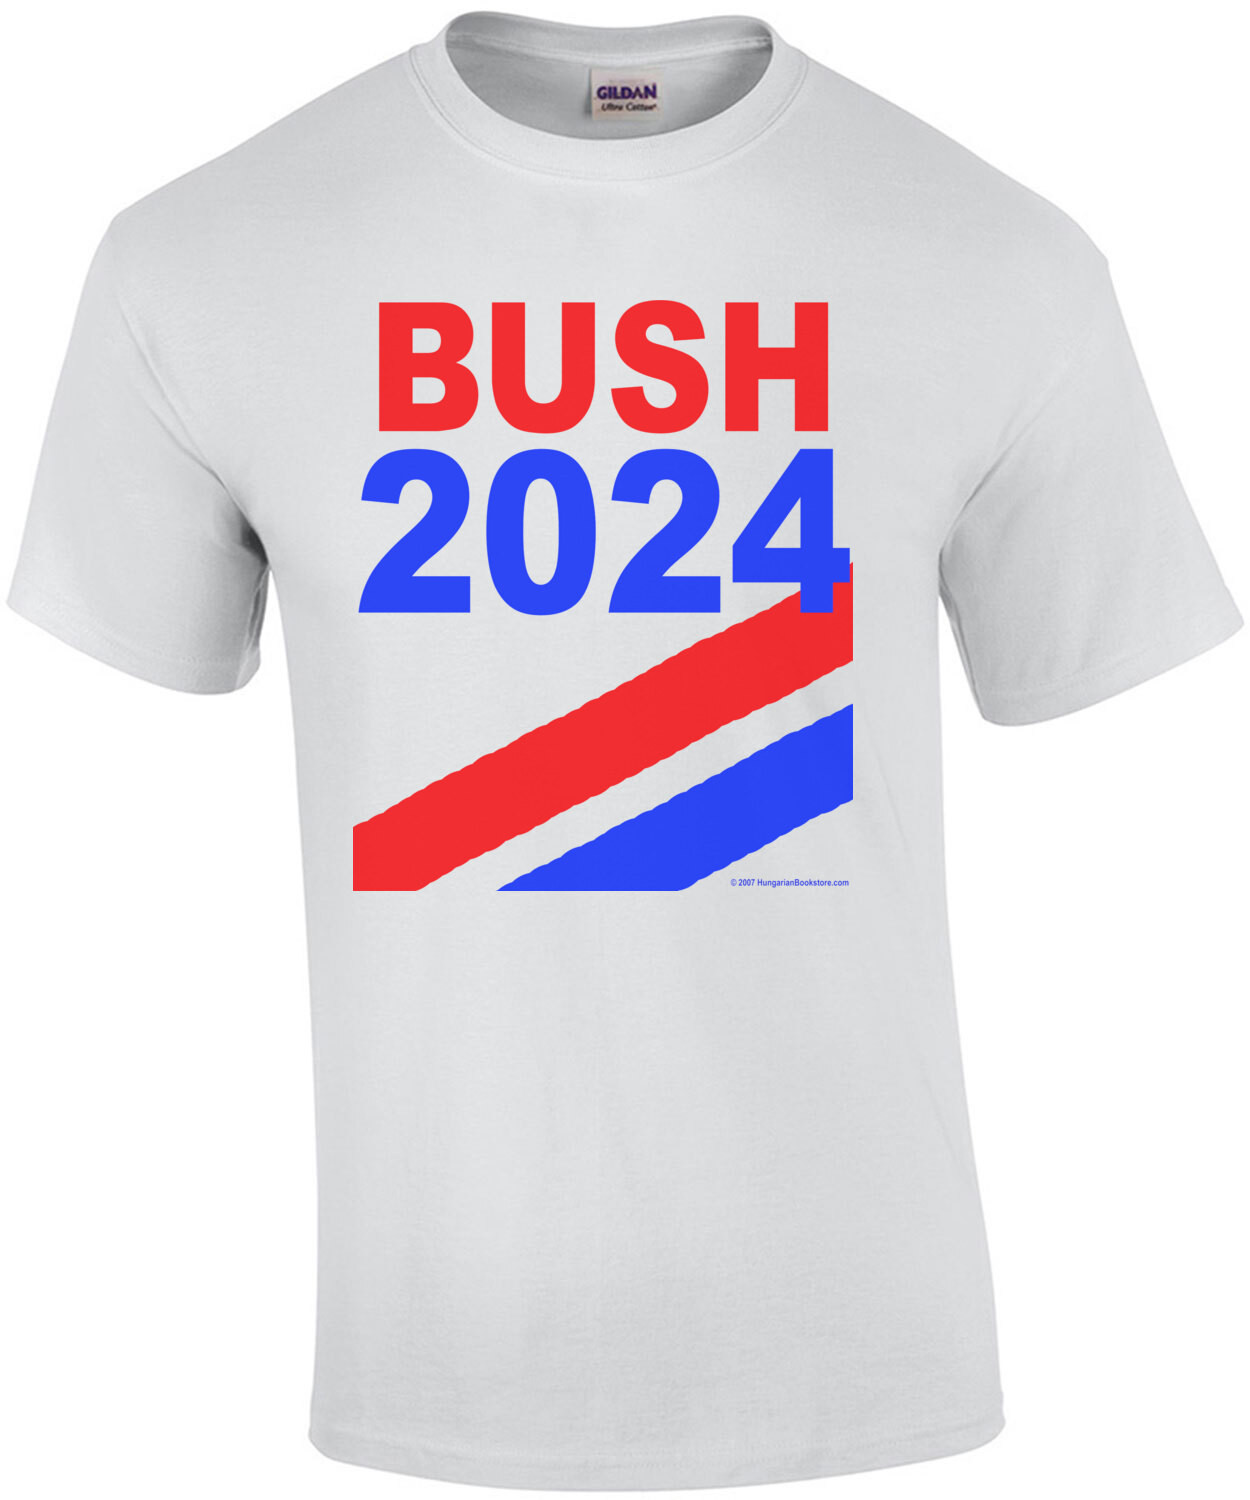 Bush 2024 - 2024 Republican Election T-Shirt